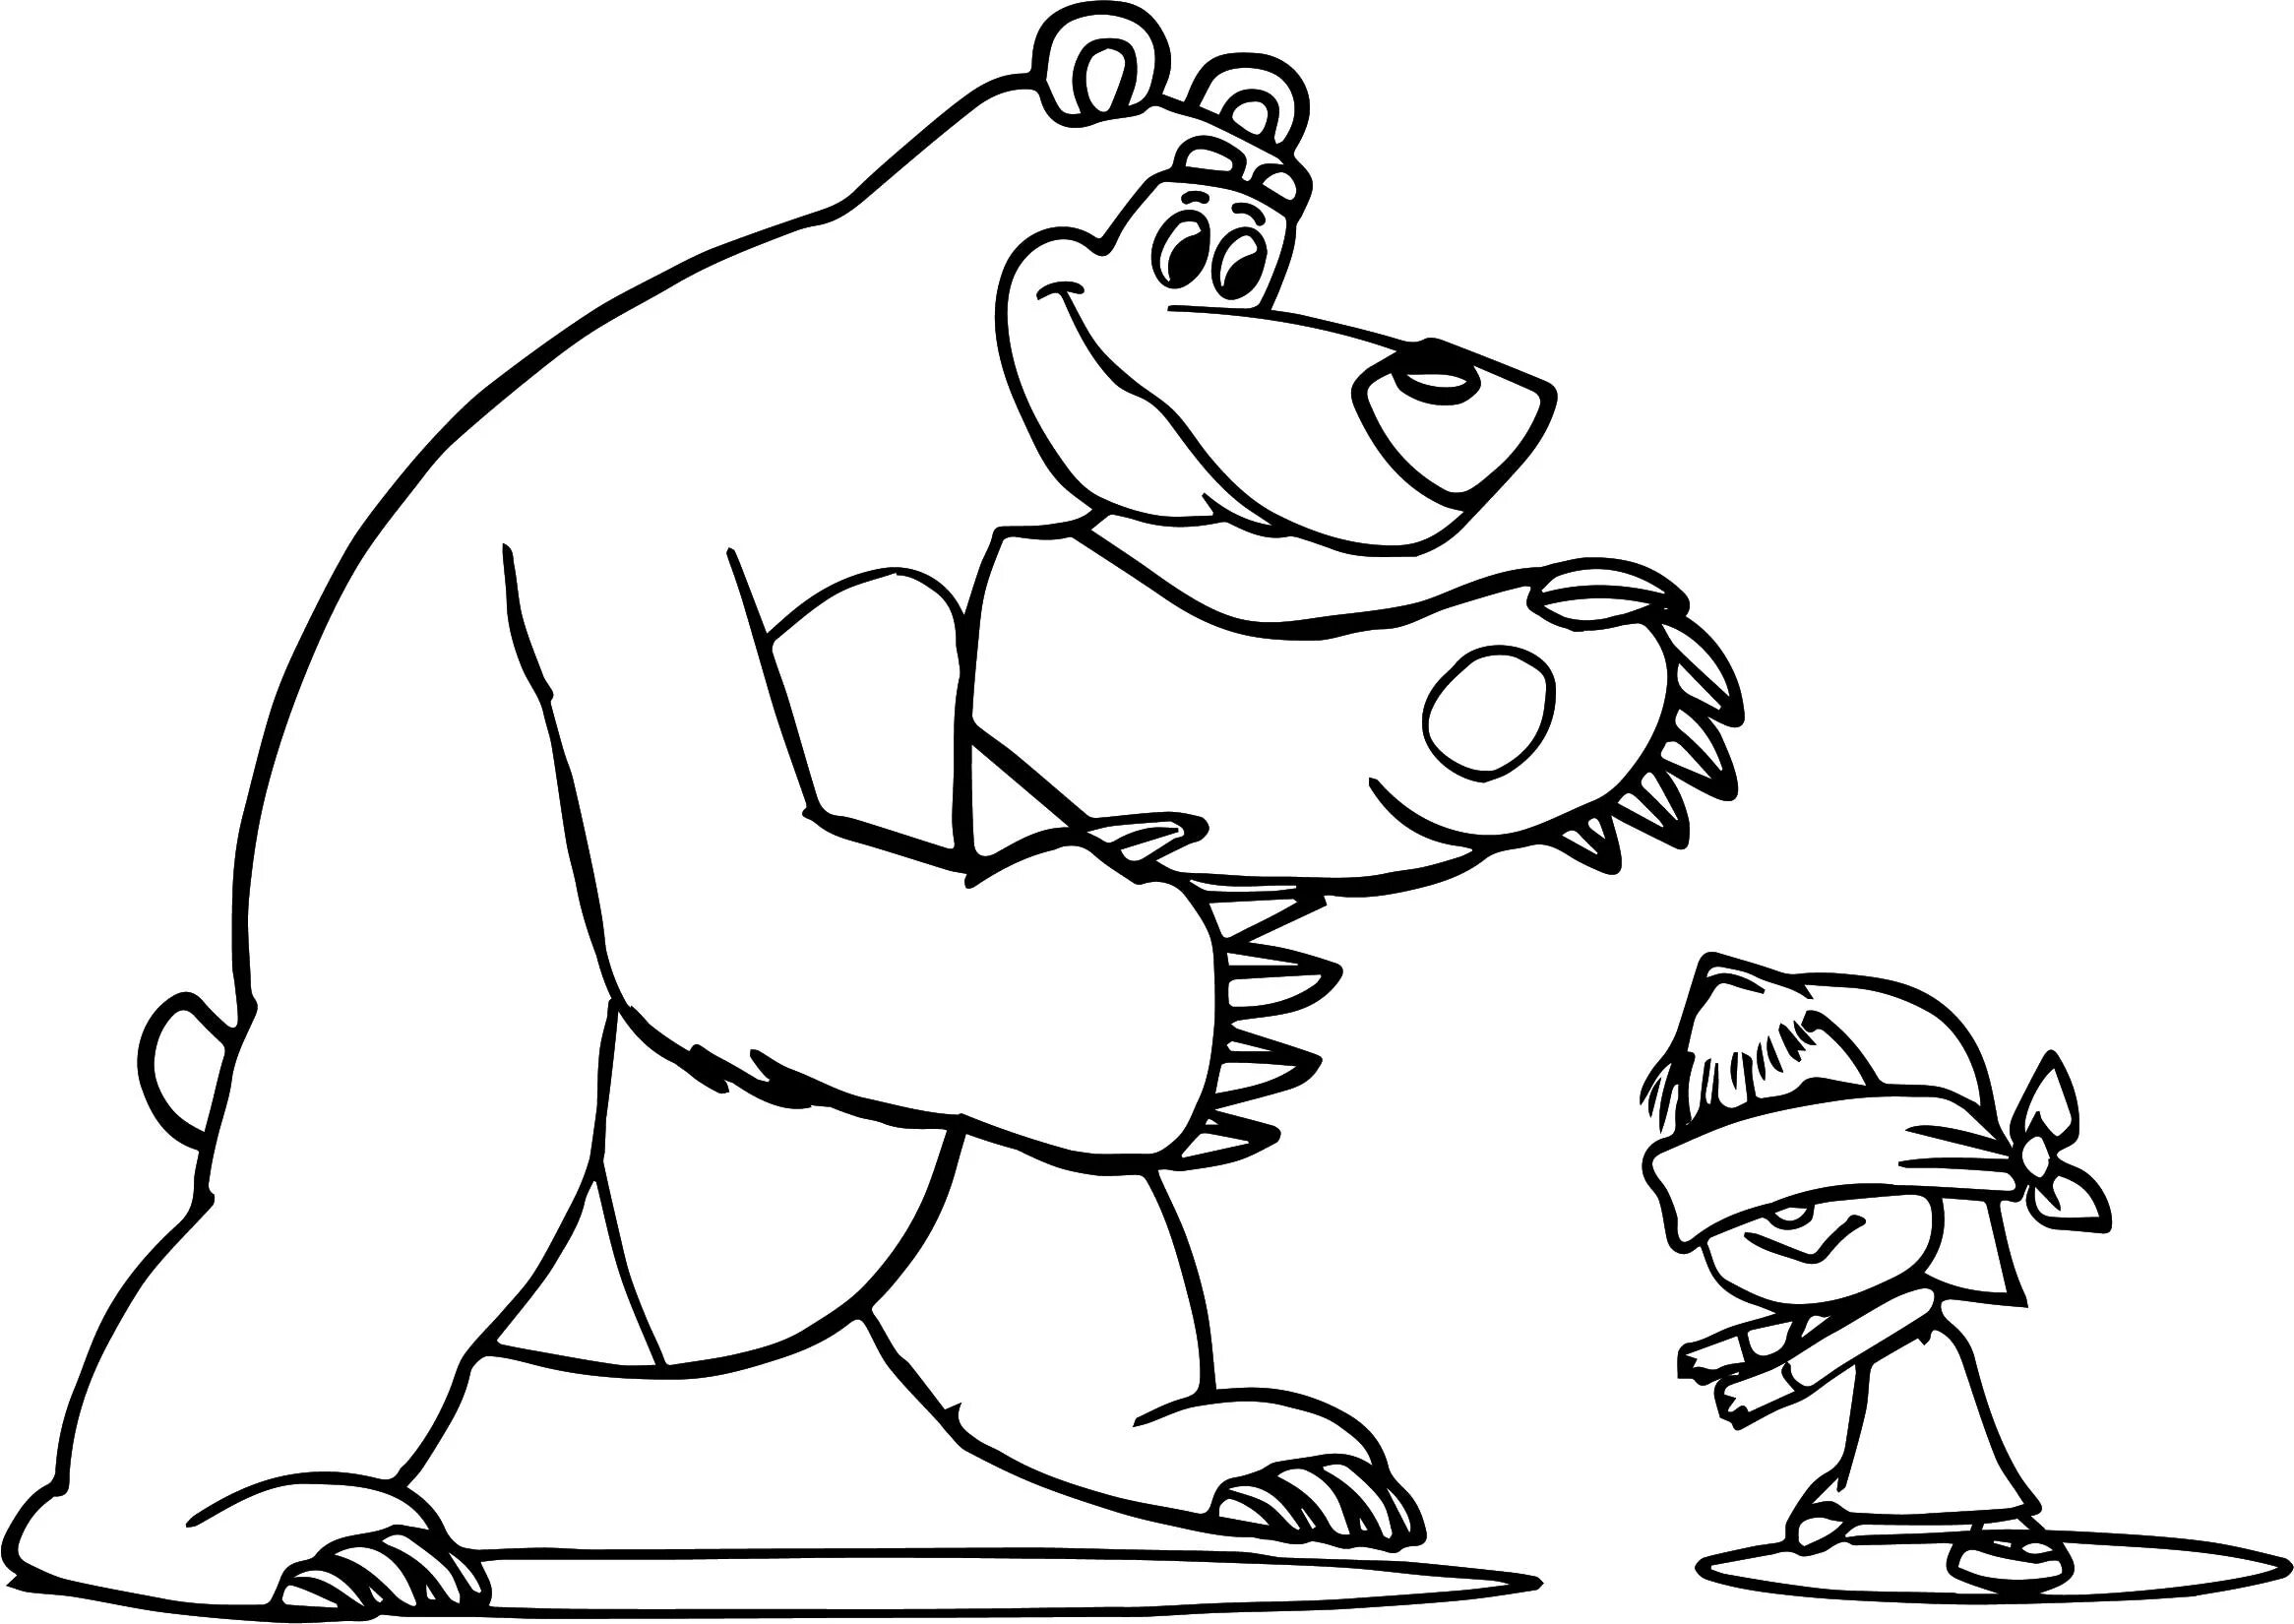 Wonderful Masha and the bear coloring book